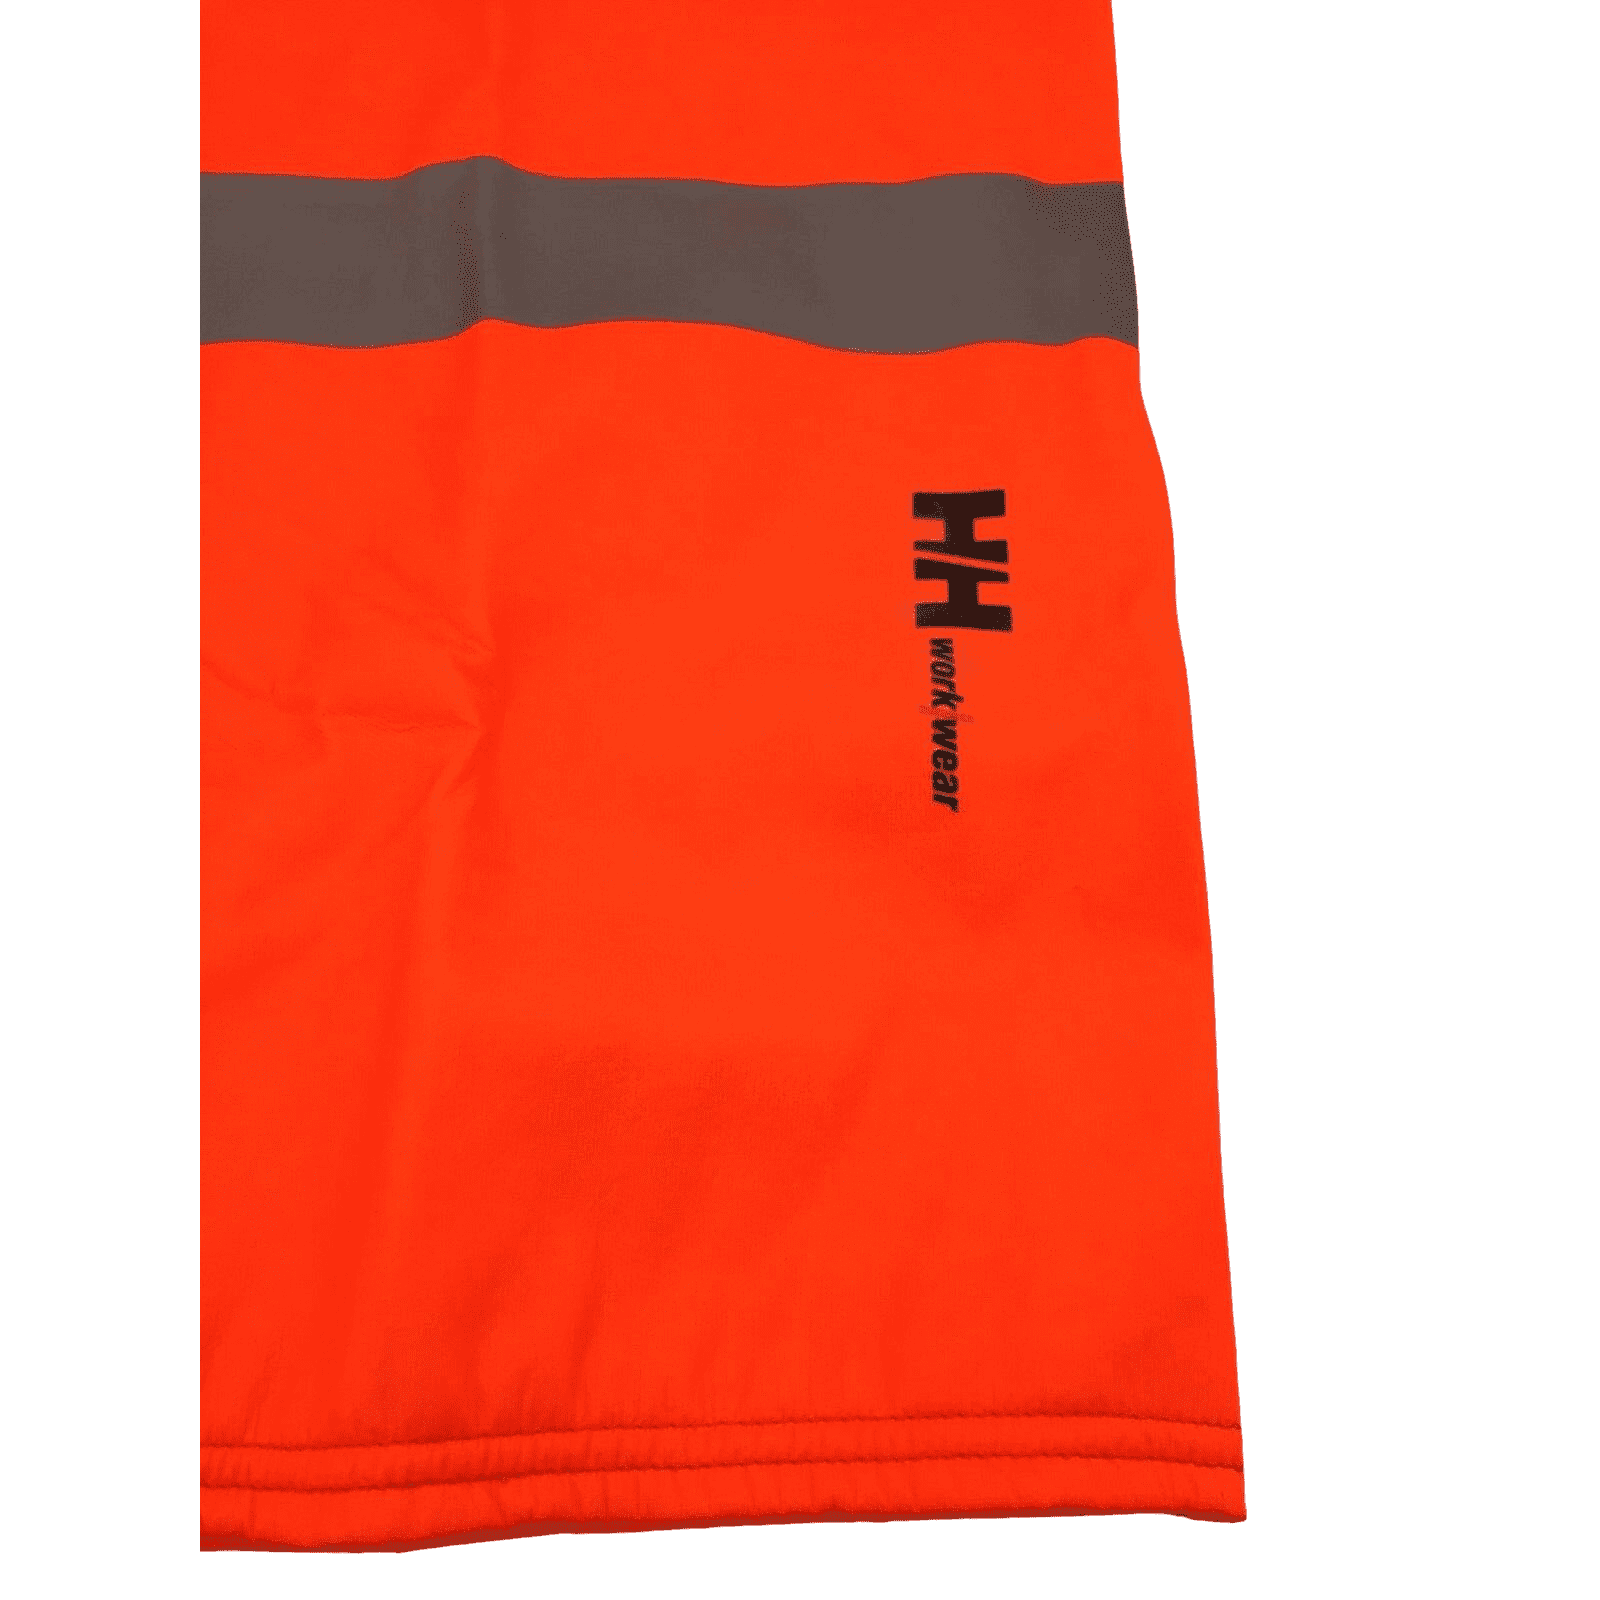 Helly Hansen Bib Pants: Men's | Flame Retardant I Hi-Vision Orange | Size: 2XL